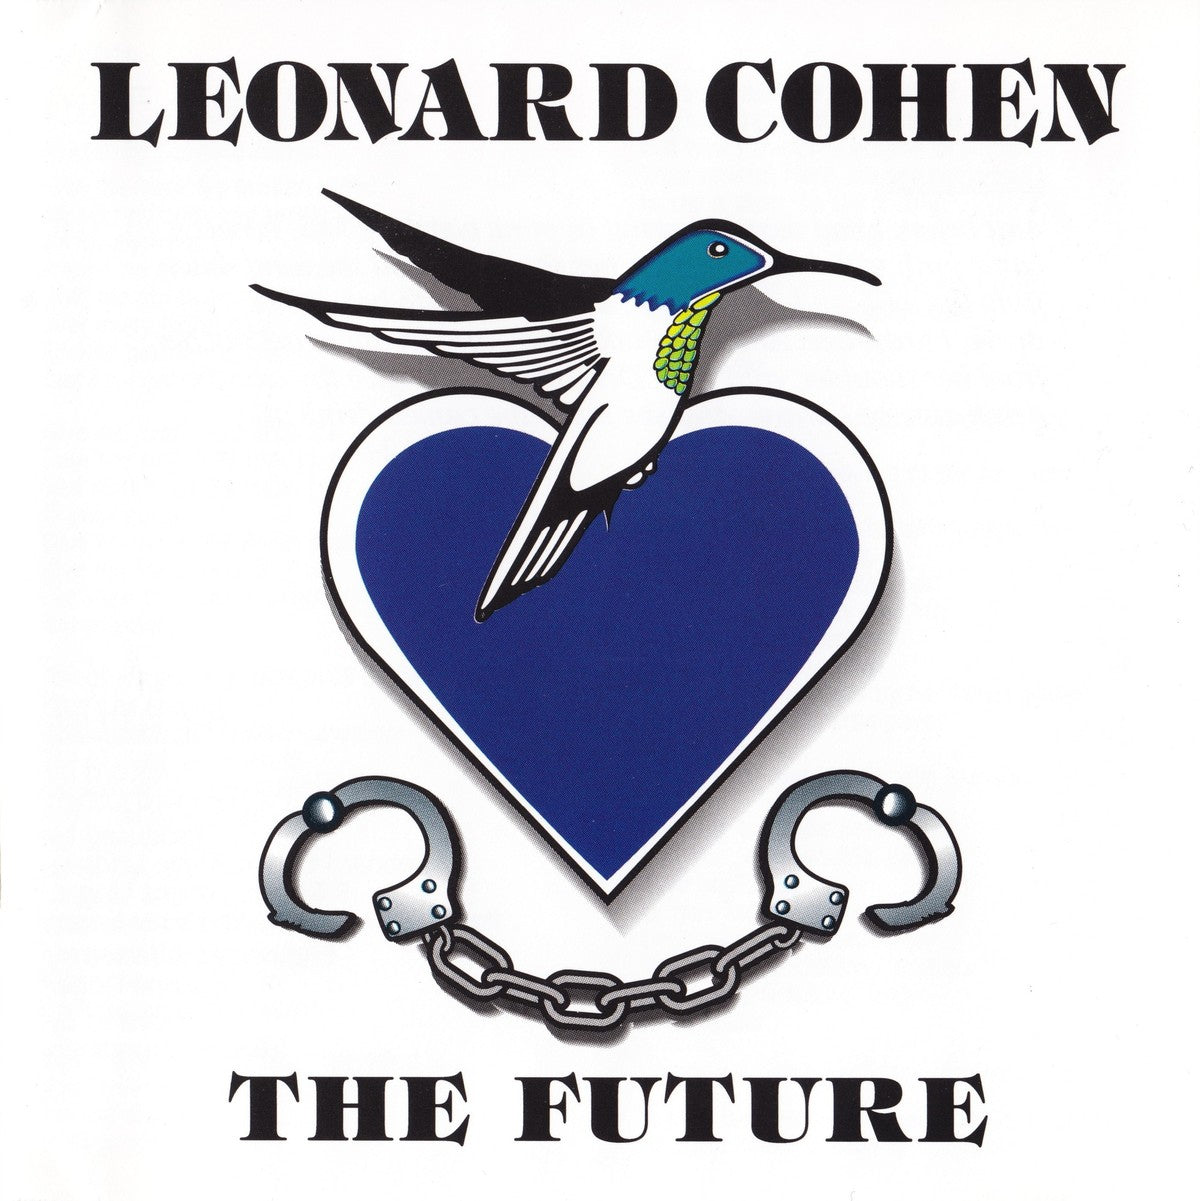 Leonard Cohen - The Future (Vinyl LP)